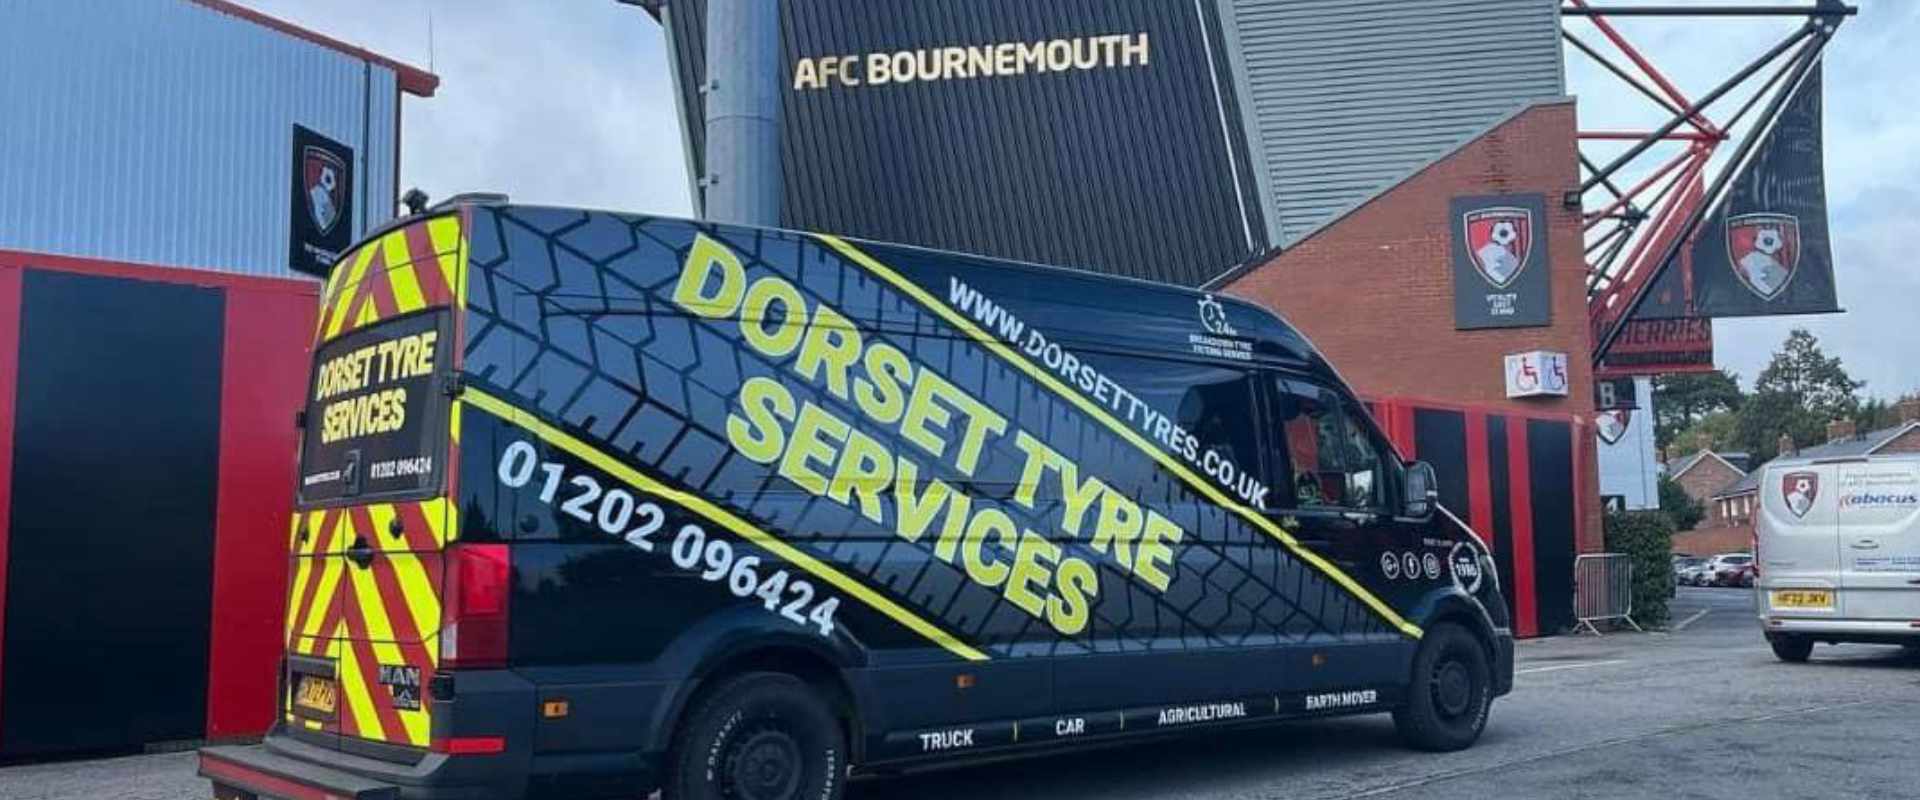 Dorset Tyre Services Company Vehicle